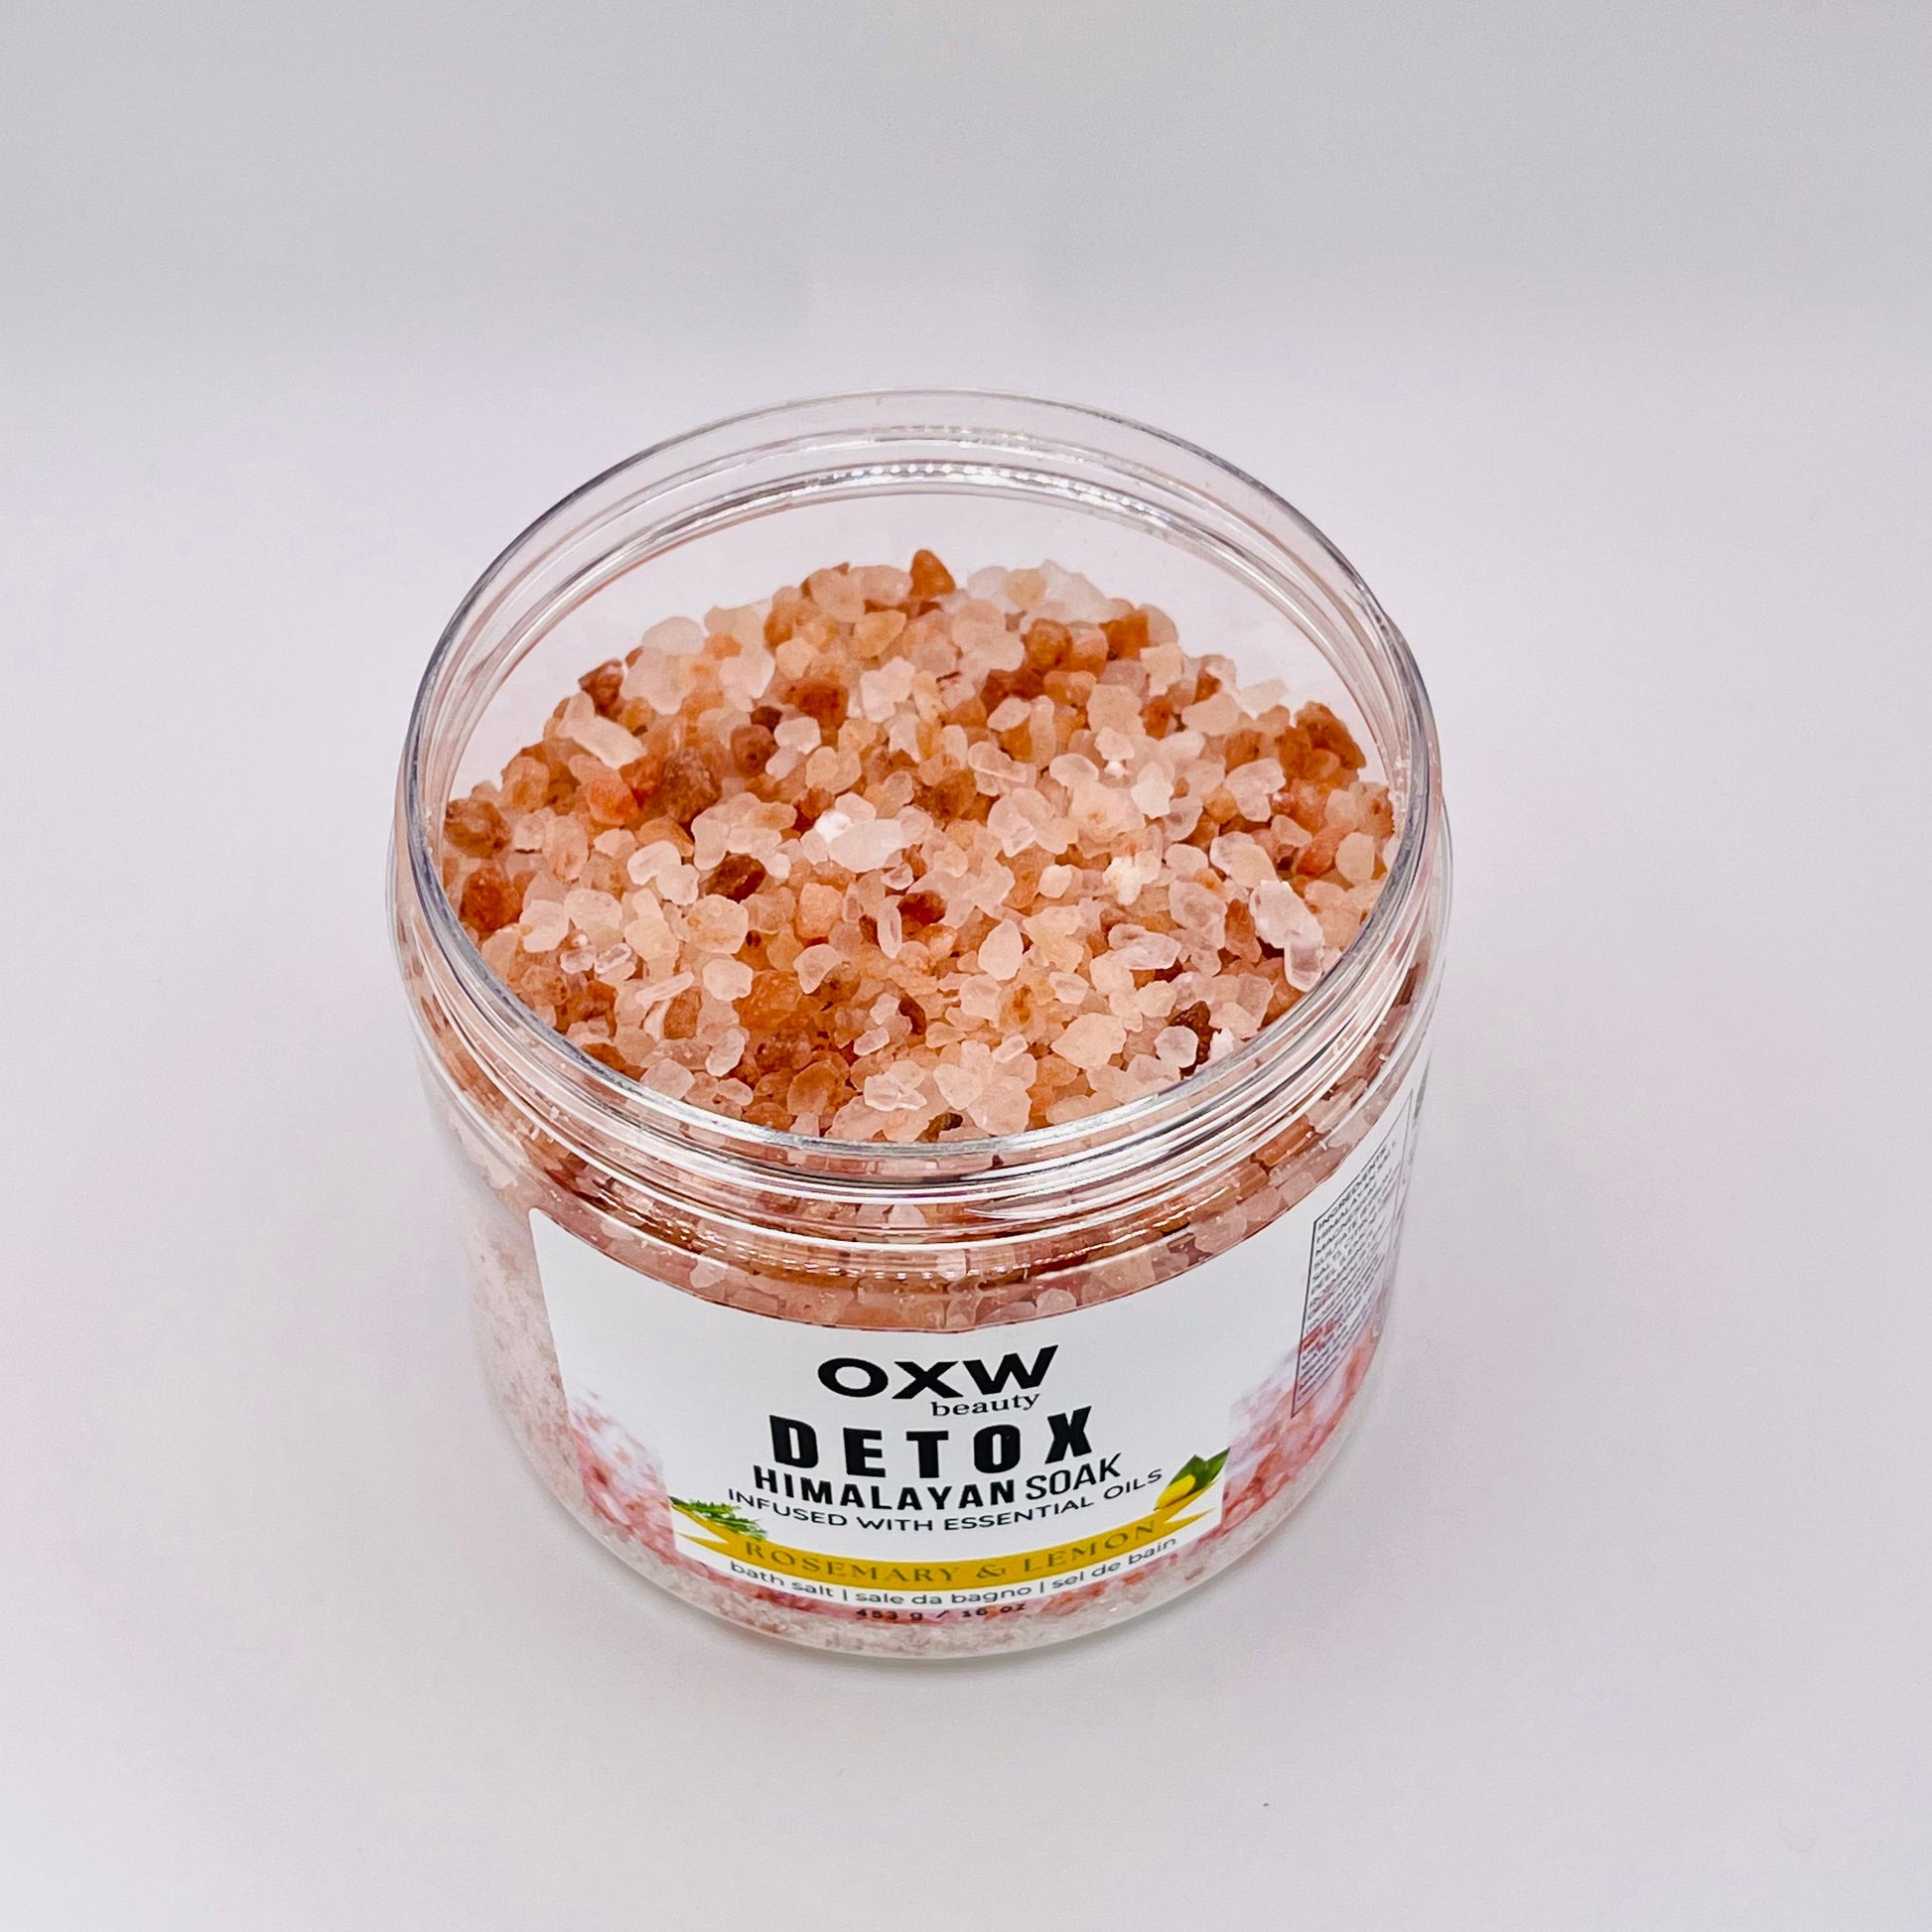 Detox+ Himalayan Epsom Bath Salt Infused with Rosemary and Lemon Essential Oils 1 lb Jar - OXW Beauty